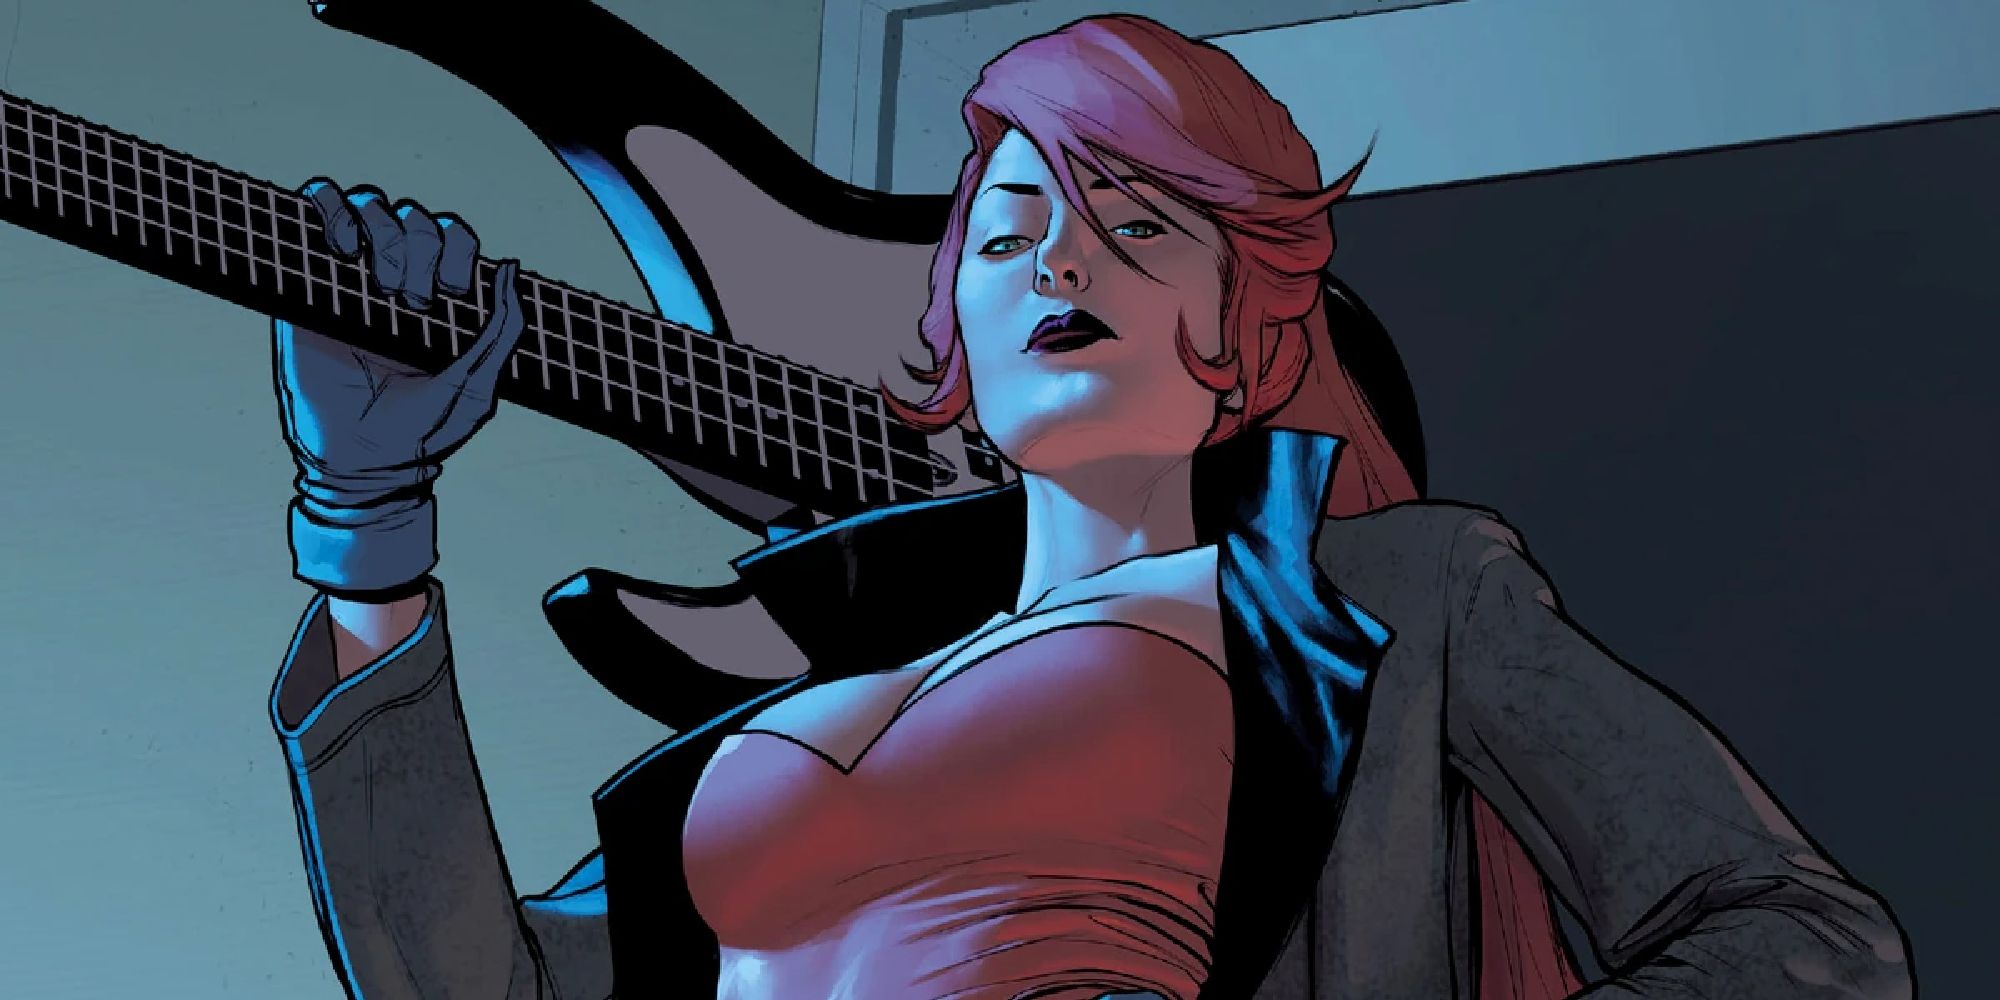 Elsa holding a bass guitar in the comics